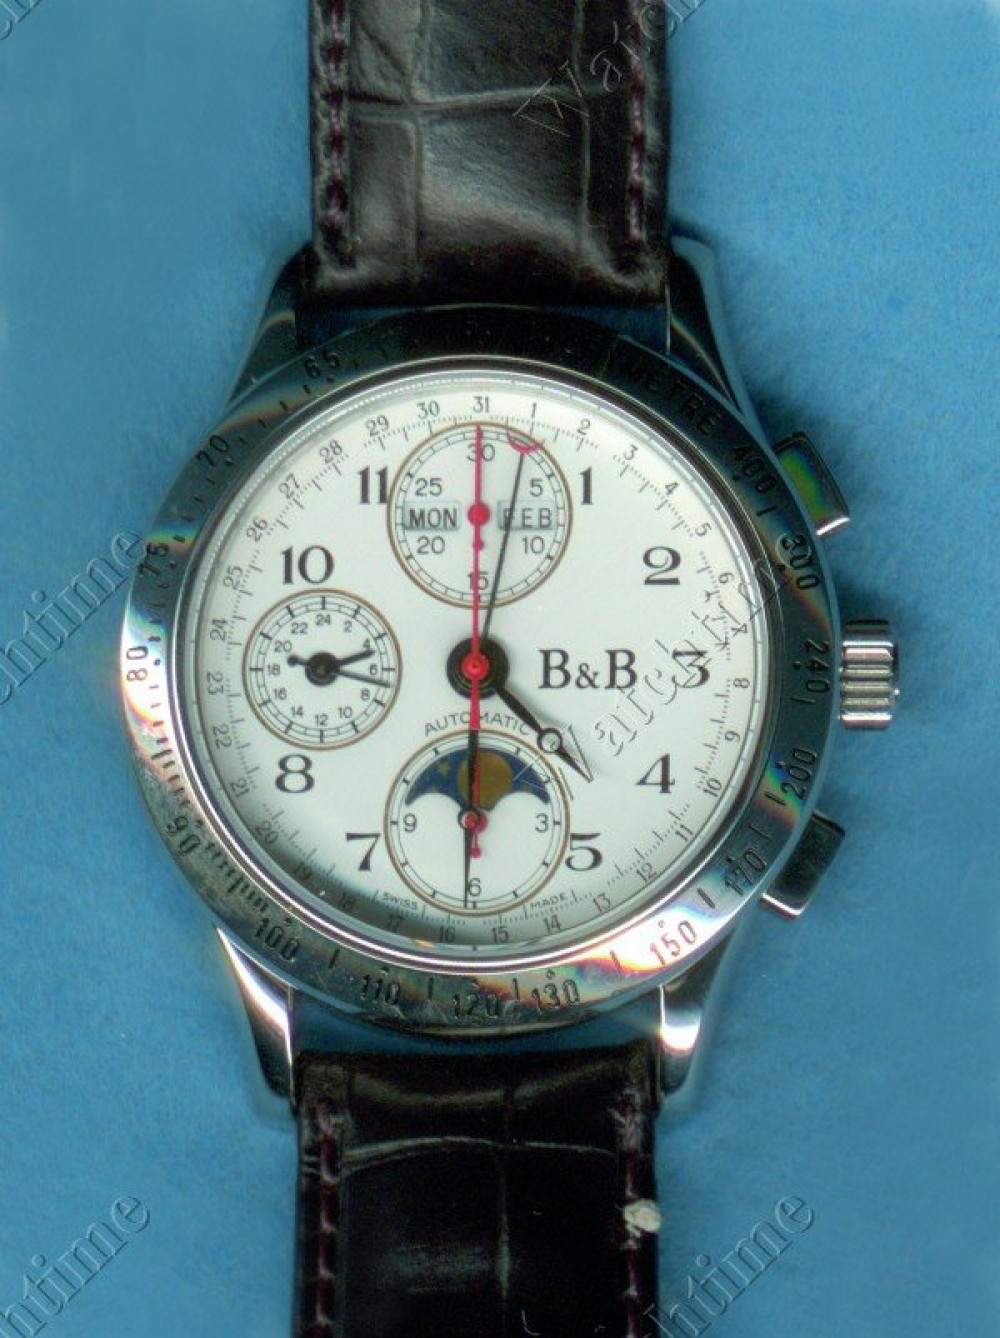 Zegarek firmy B & B, model Galilei-3